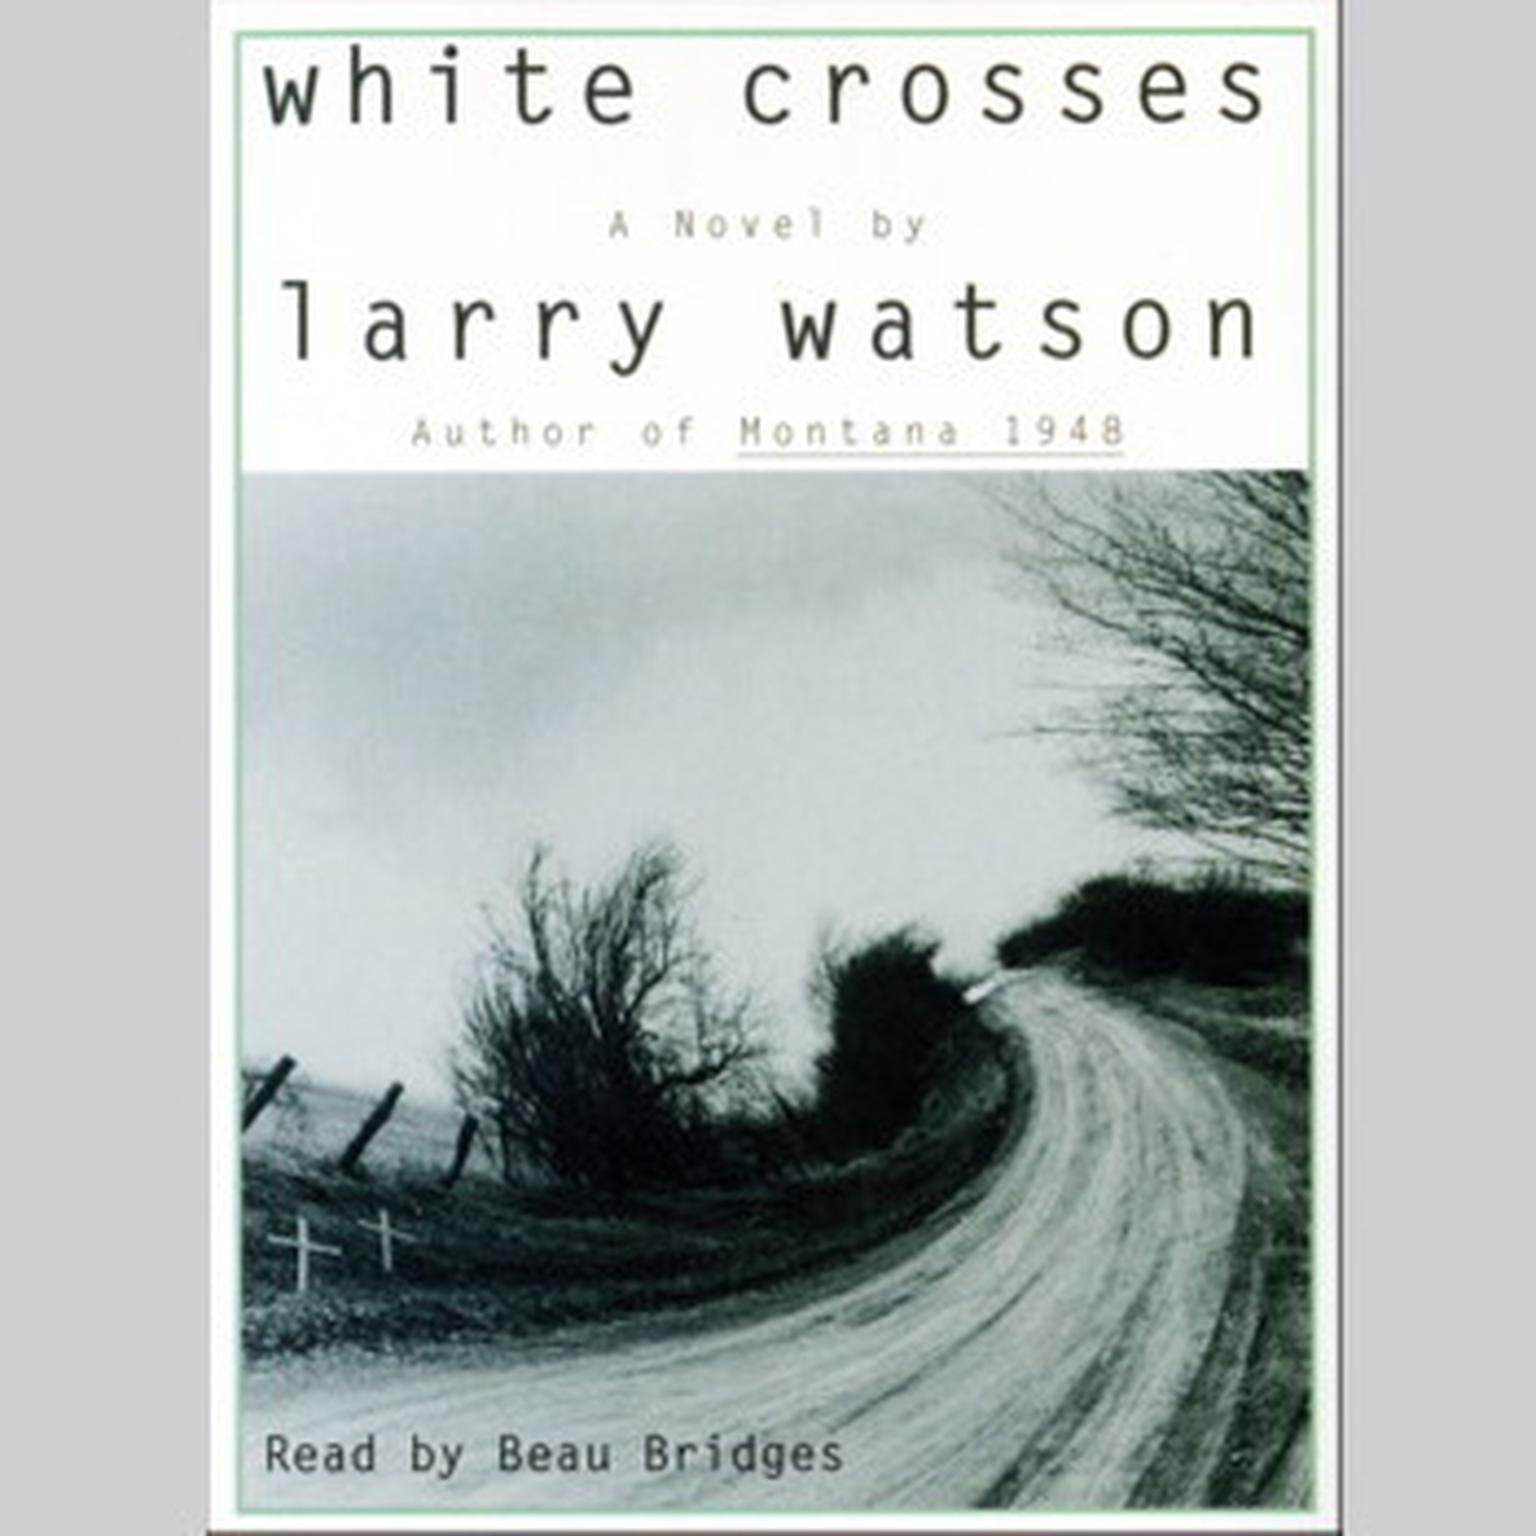 White Crosses (Abridged) Audiobook, by Larry Watson